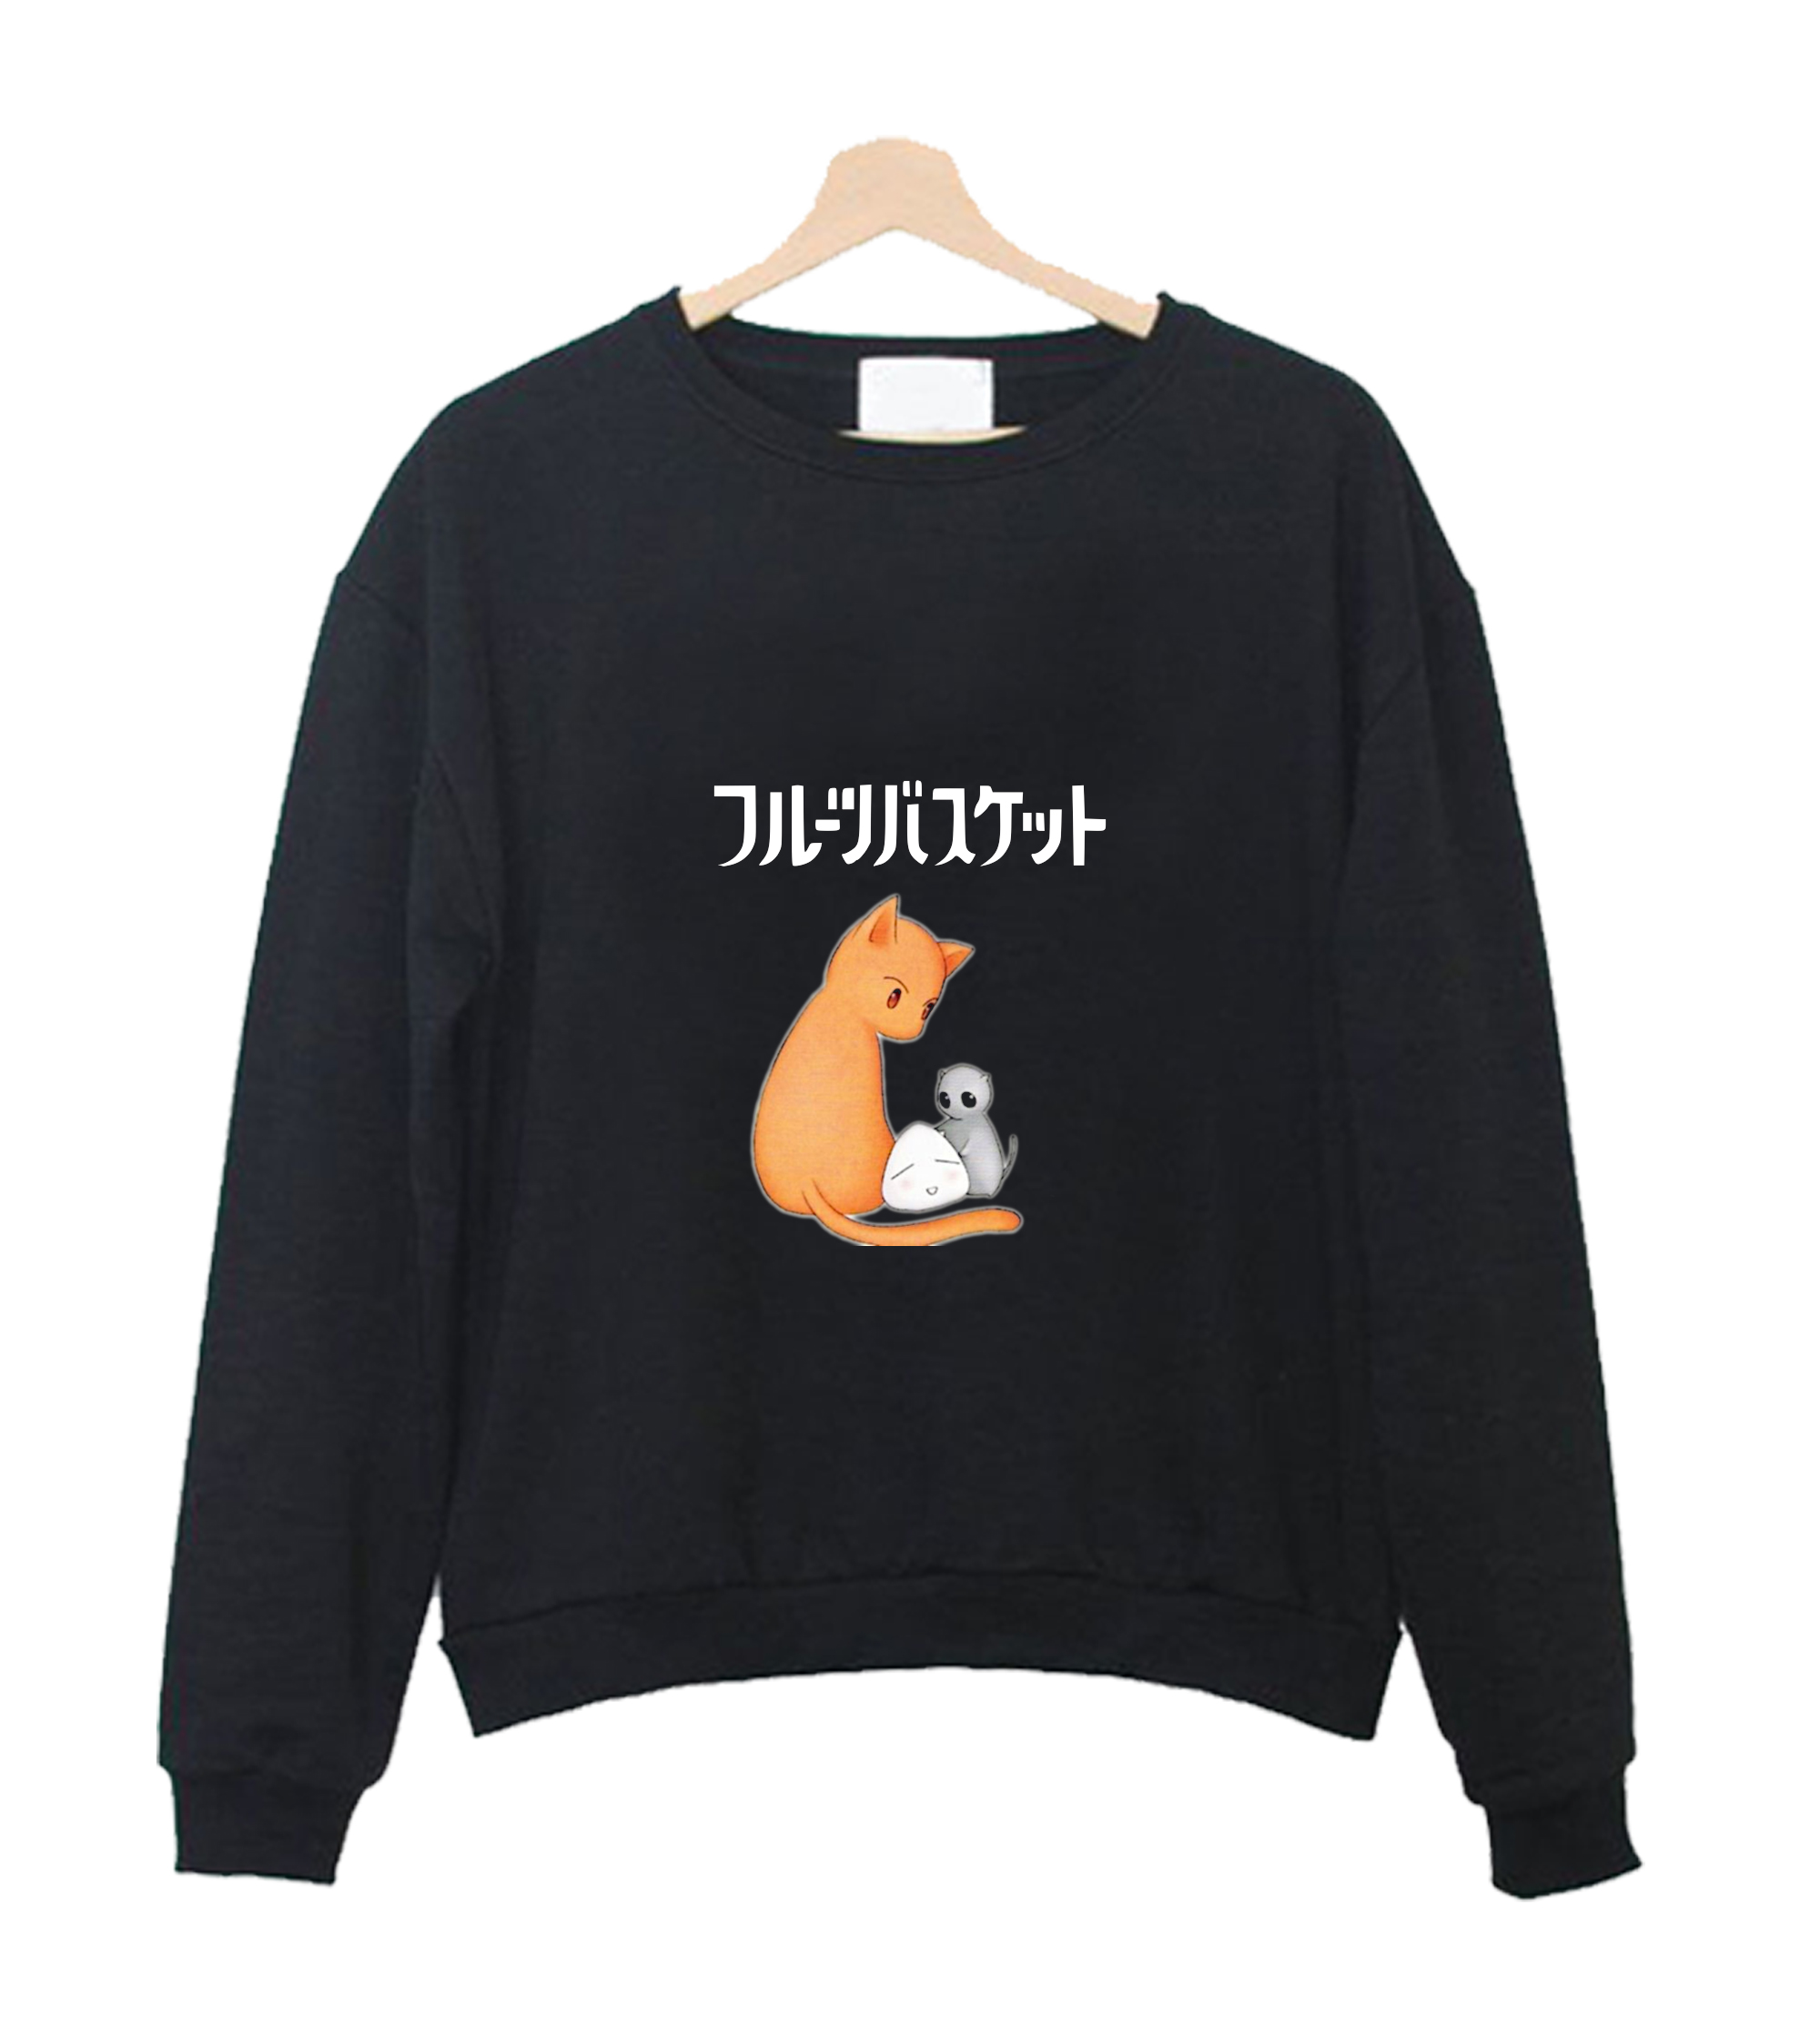 Fruits Basket Anime Cat Mouse Onigiri Crewneck Sweatshirt